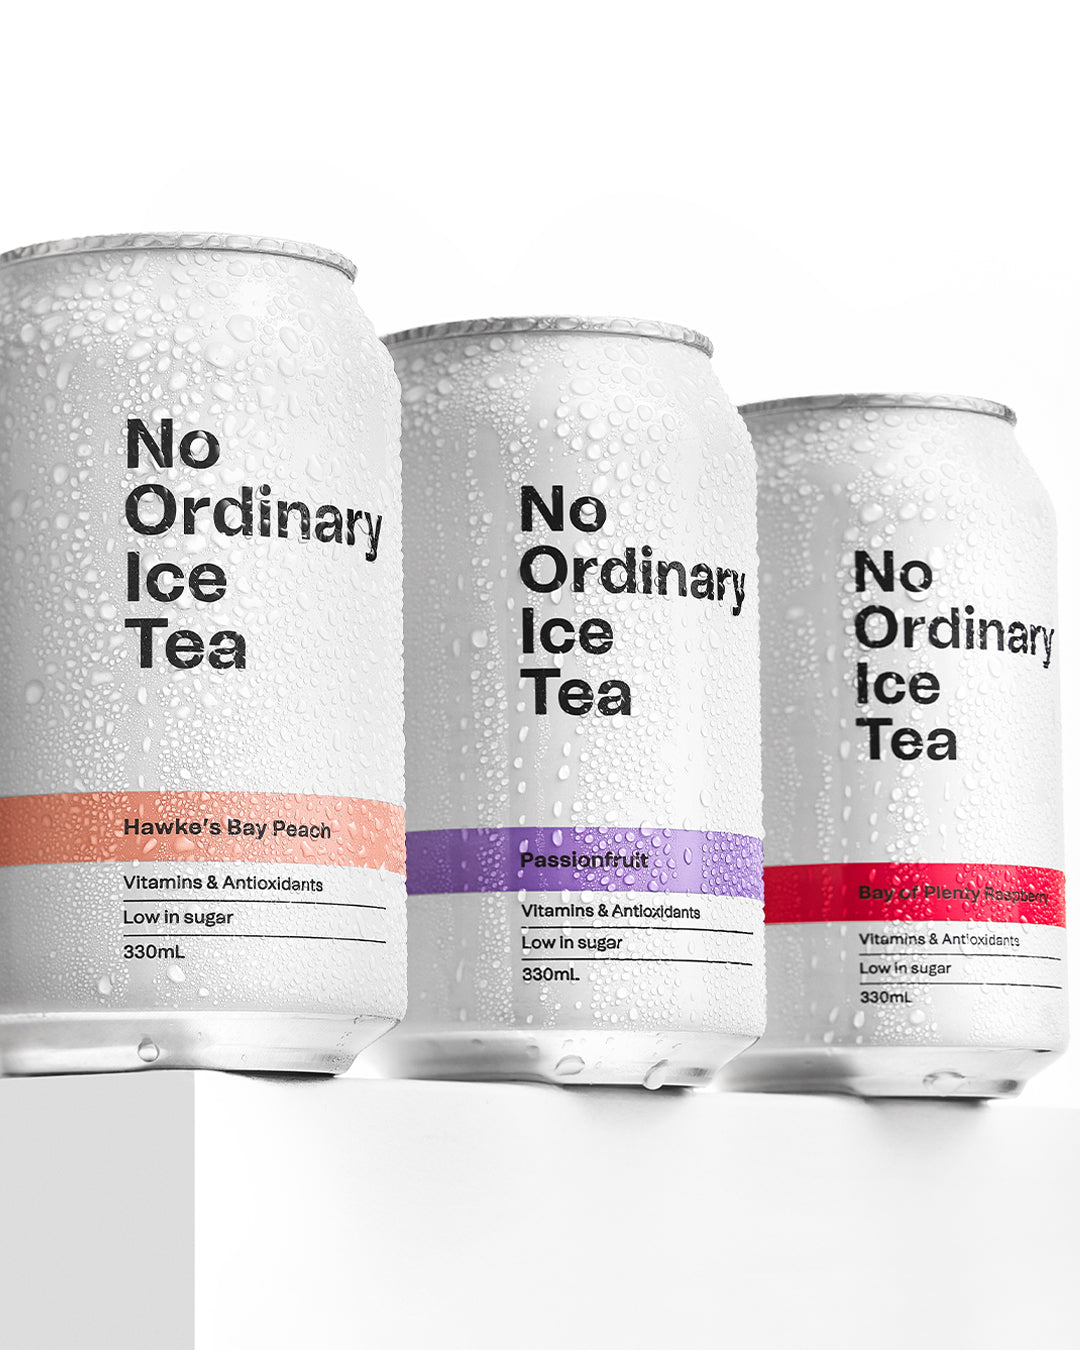 No Ordinary Ice Tea - Bay of Plenty Raspberry